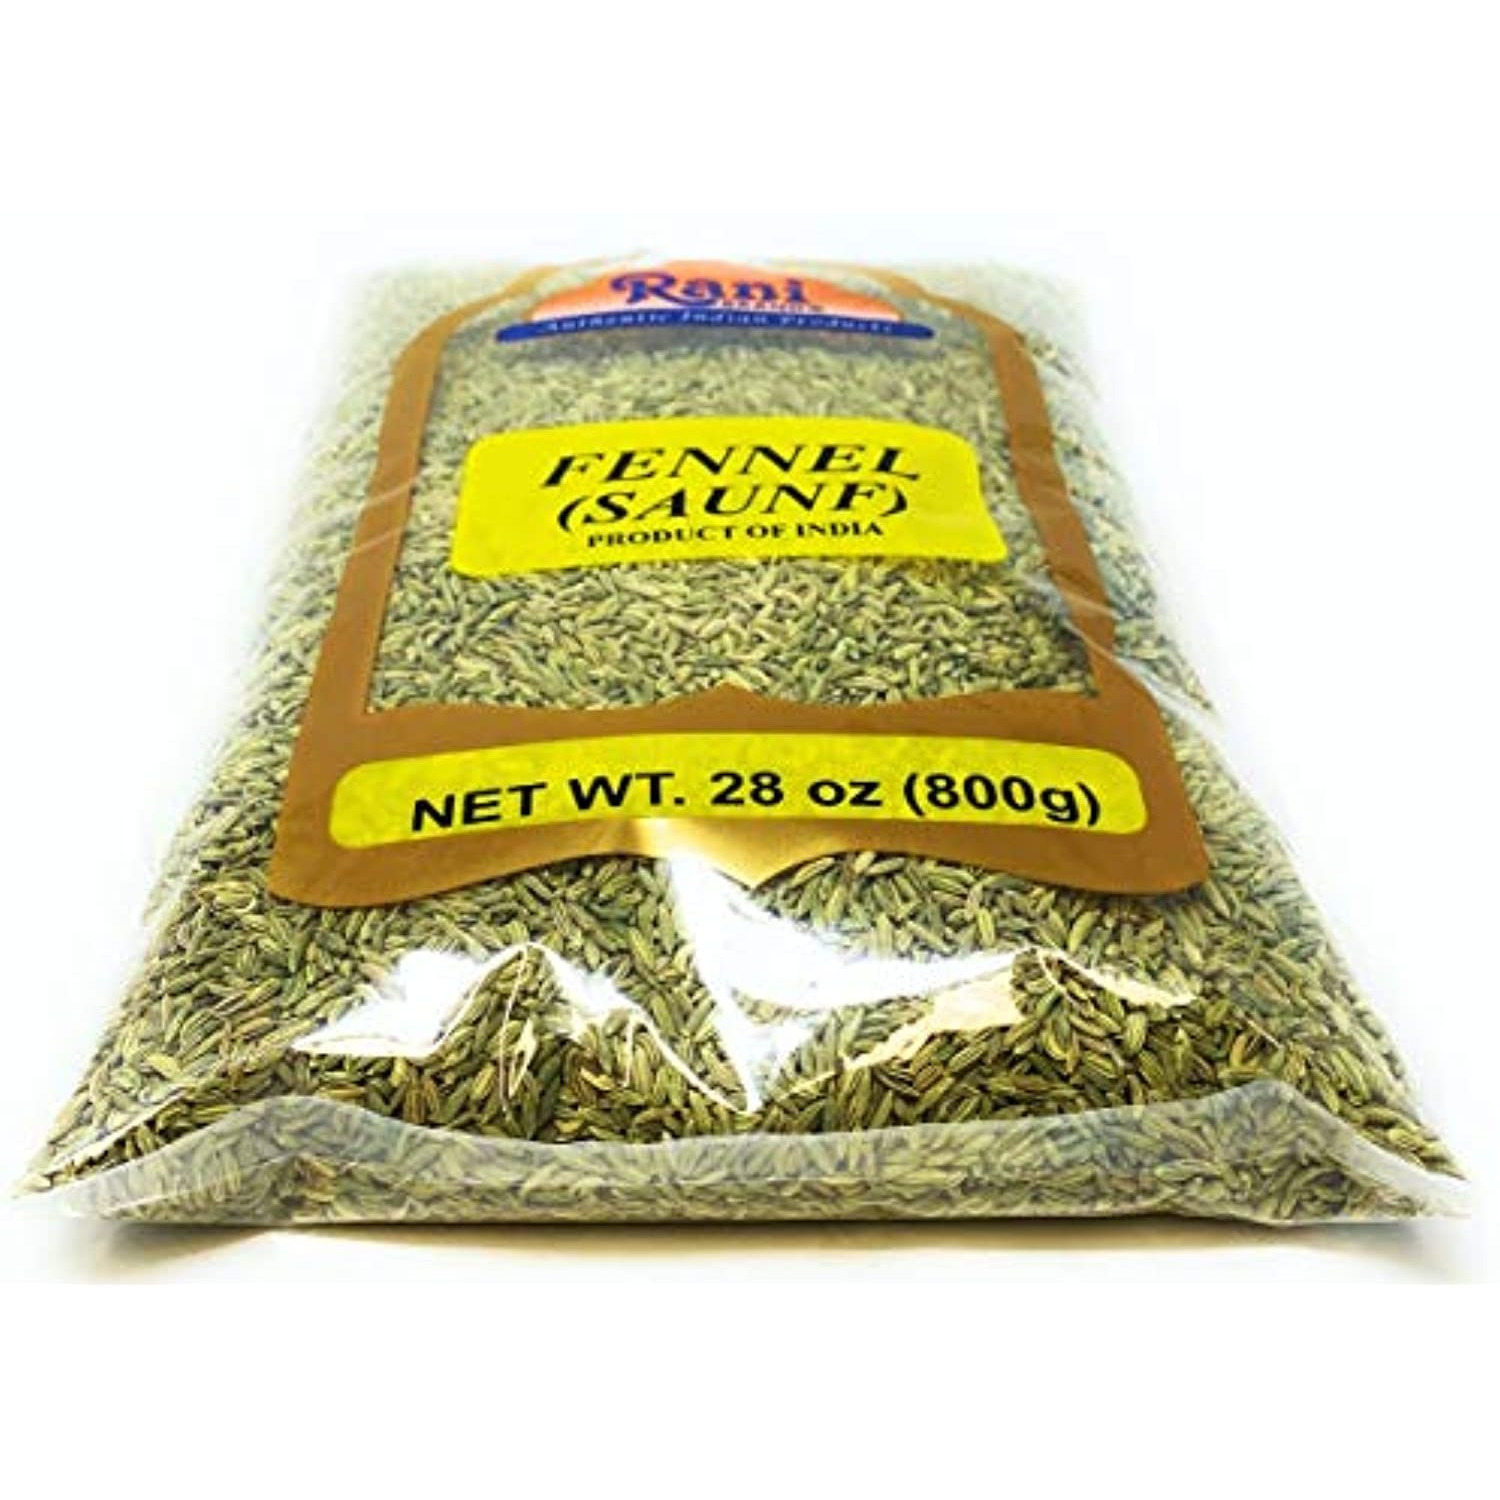 Rani Fennel Seeds (Saunf Sabut) Whole Spice 28oz (800g) All Natural ~ Gluten Friendly | NON-GMO | Vegan | Indian Origin